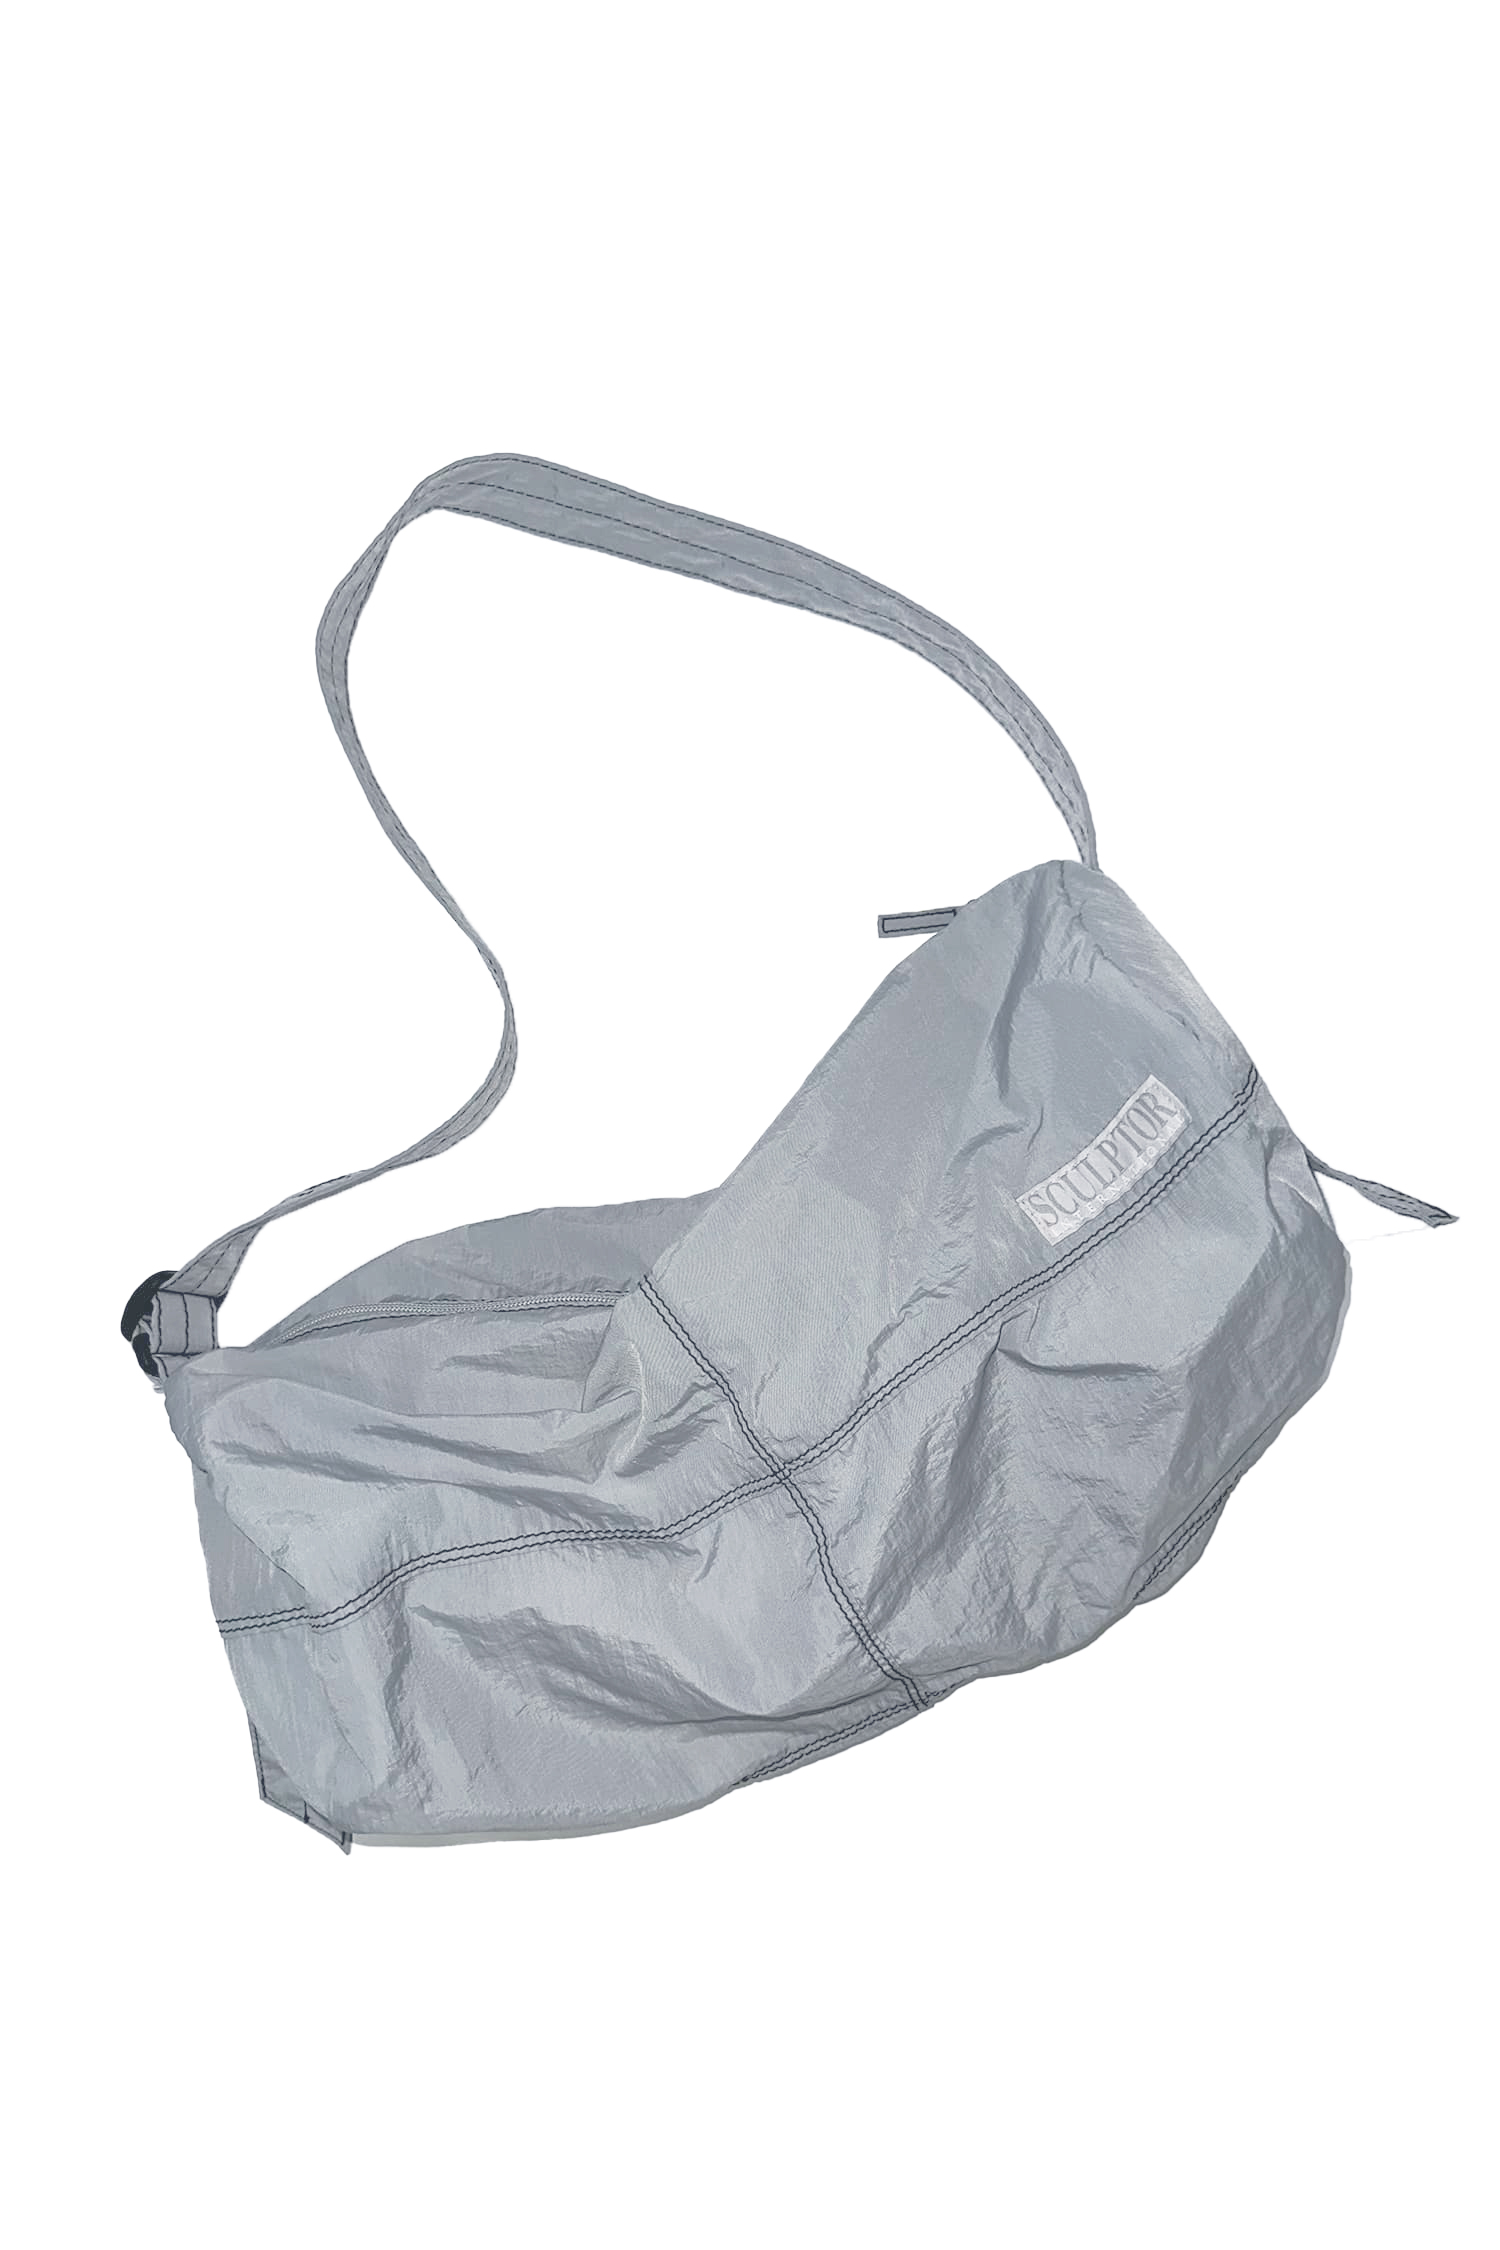 Contrast Stitch Nylon Duffle Bag Gray